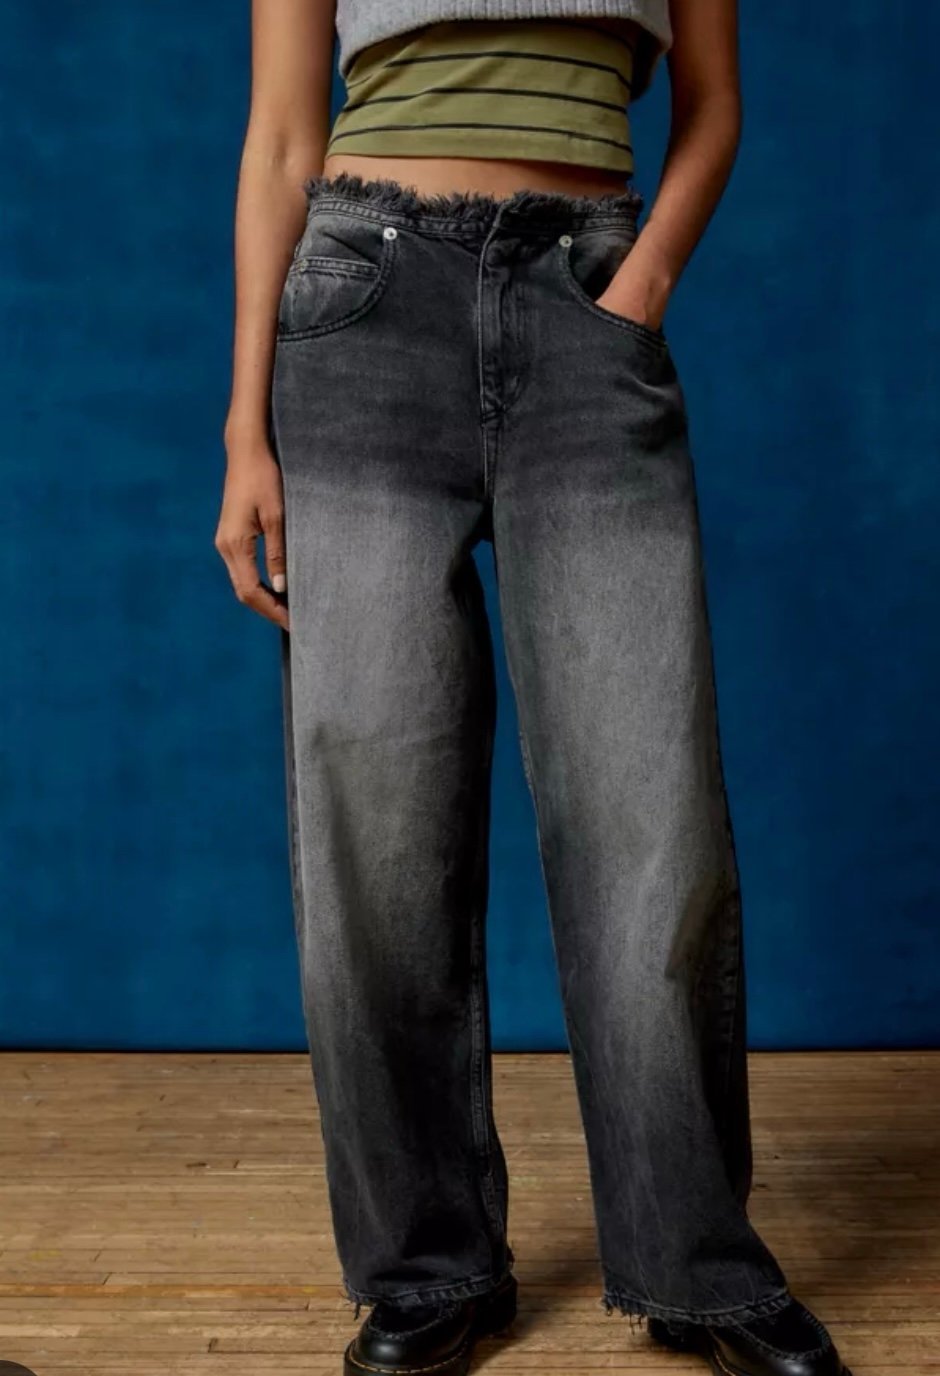 Simple Urban Outfitters BDG Jaya Boyfriend Baggy Jeans 